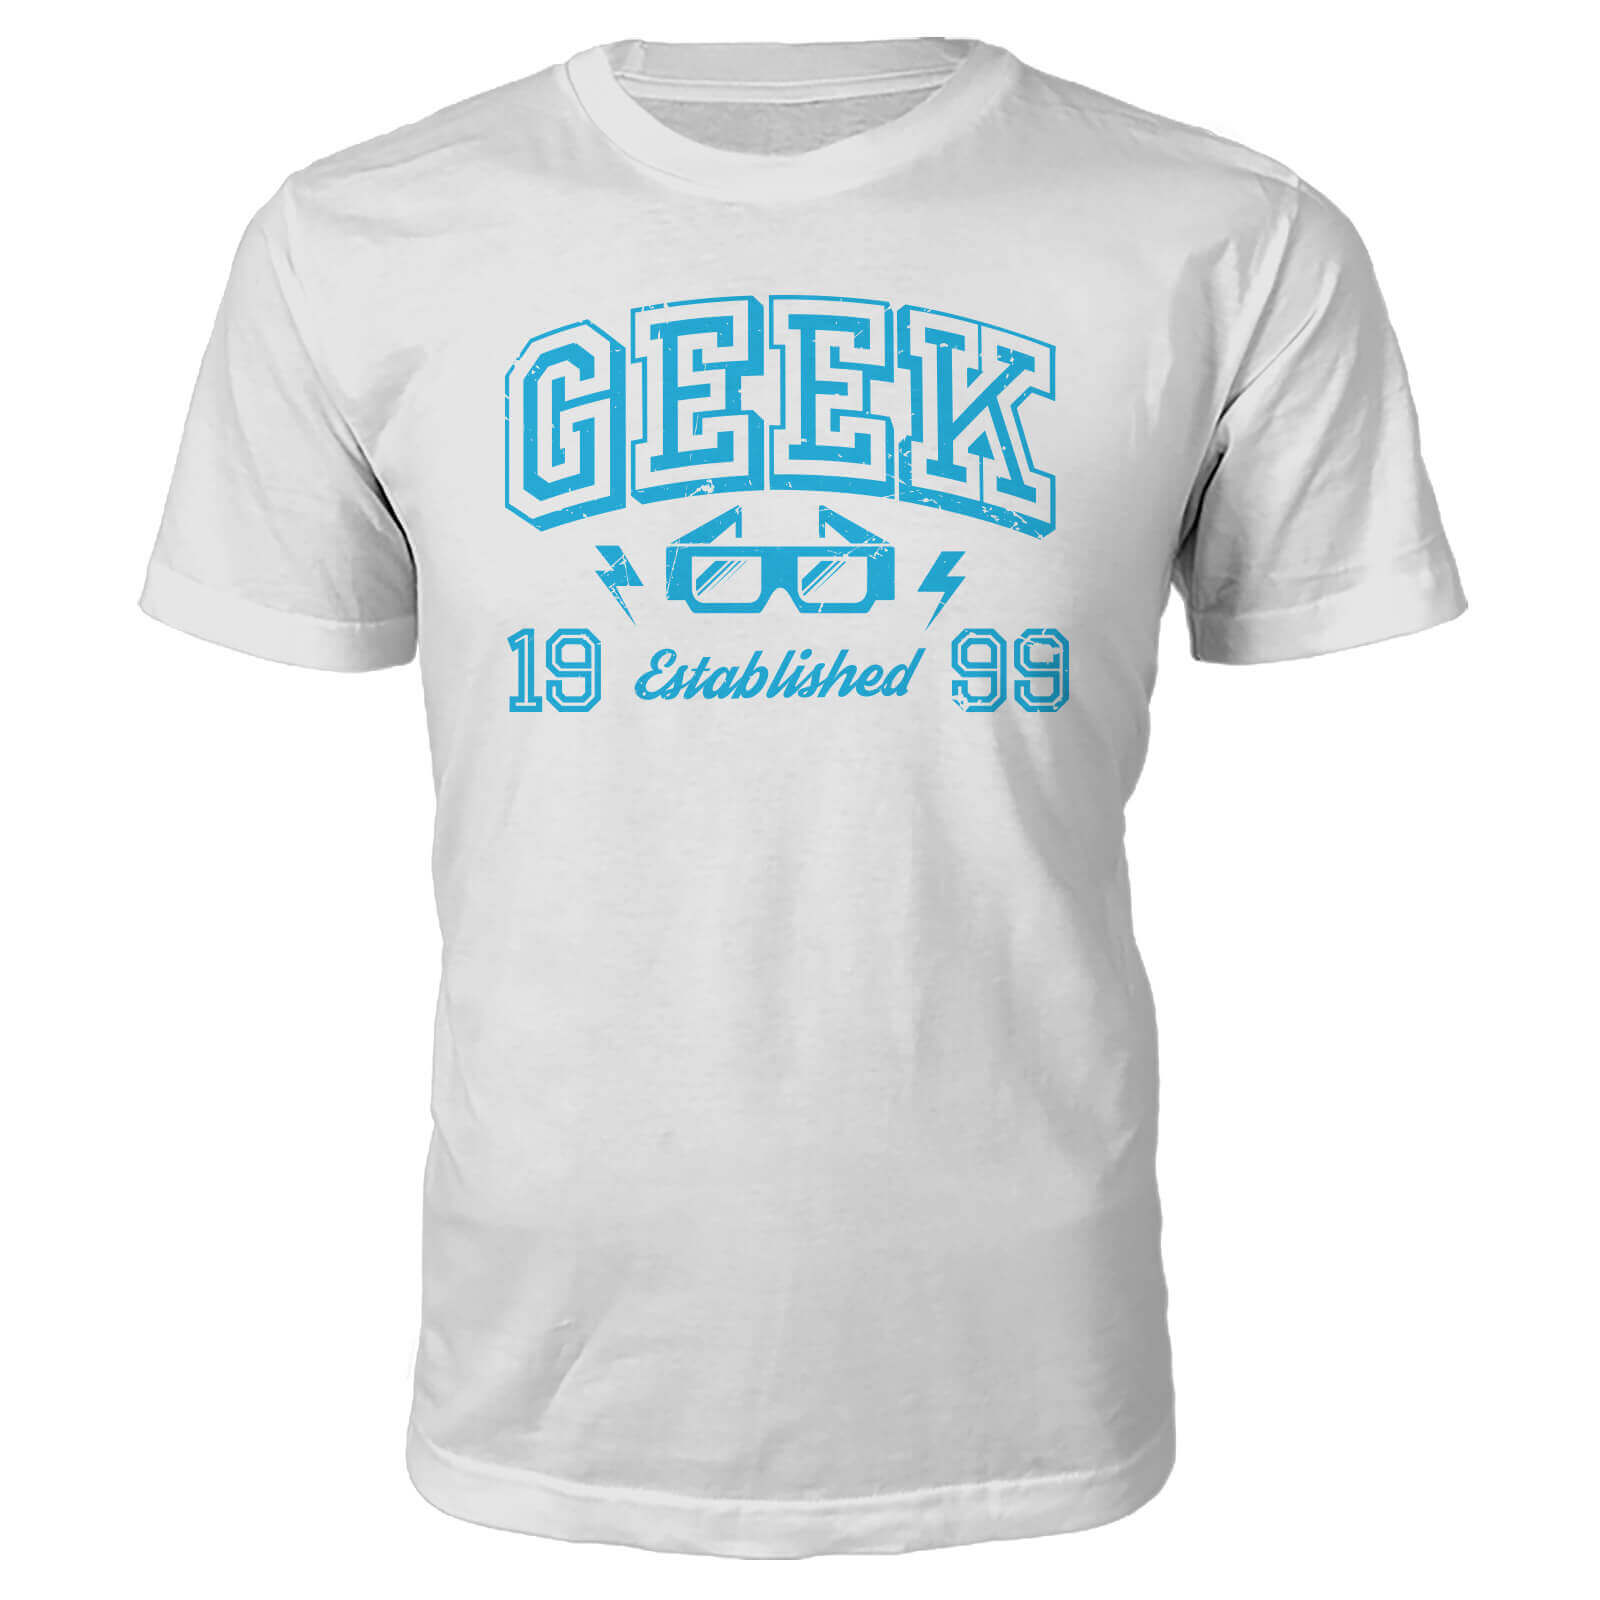 Geek Established 1990's T-Shirt- White - S - 1999